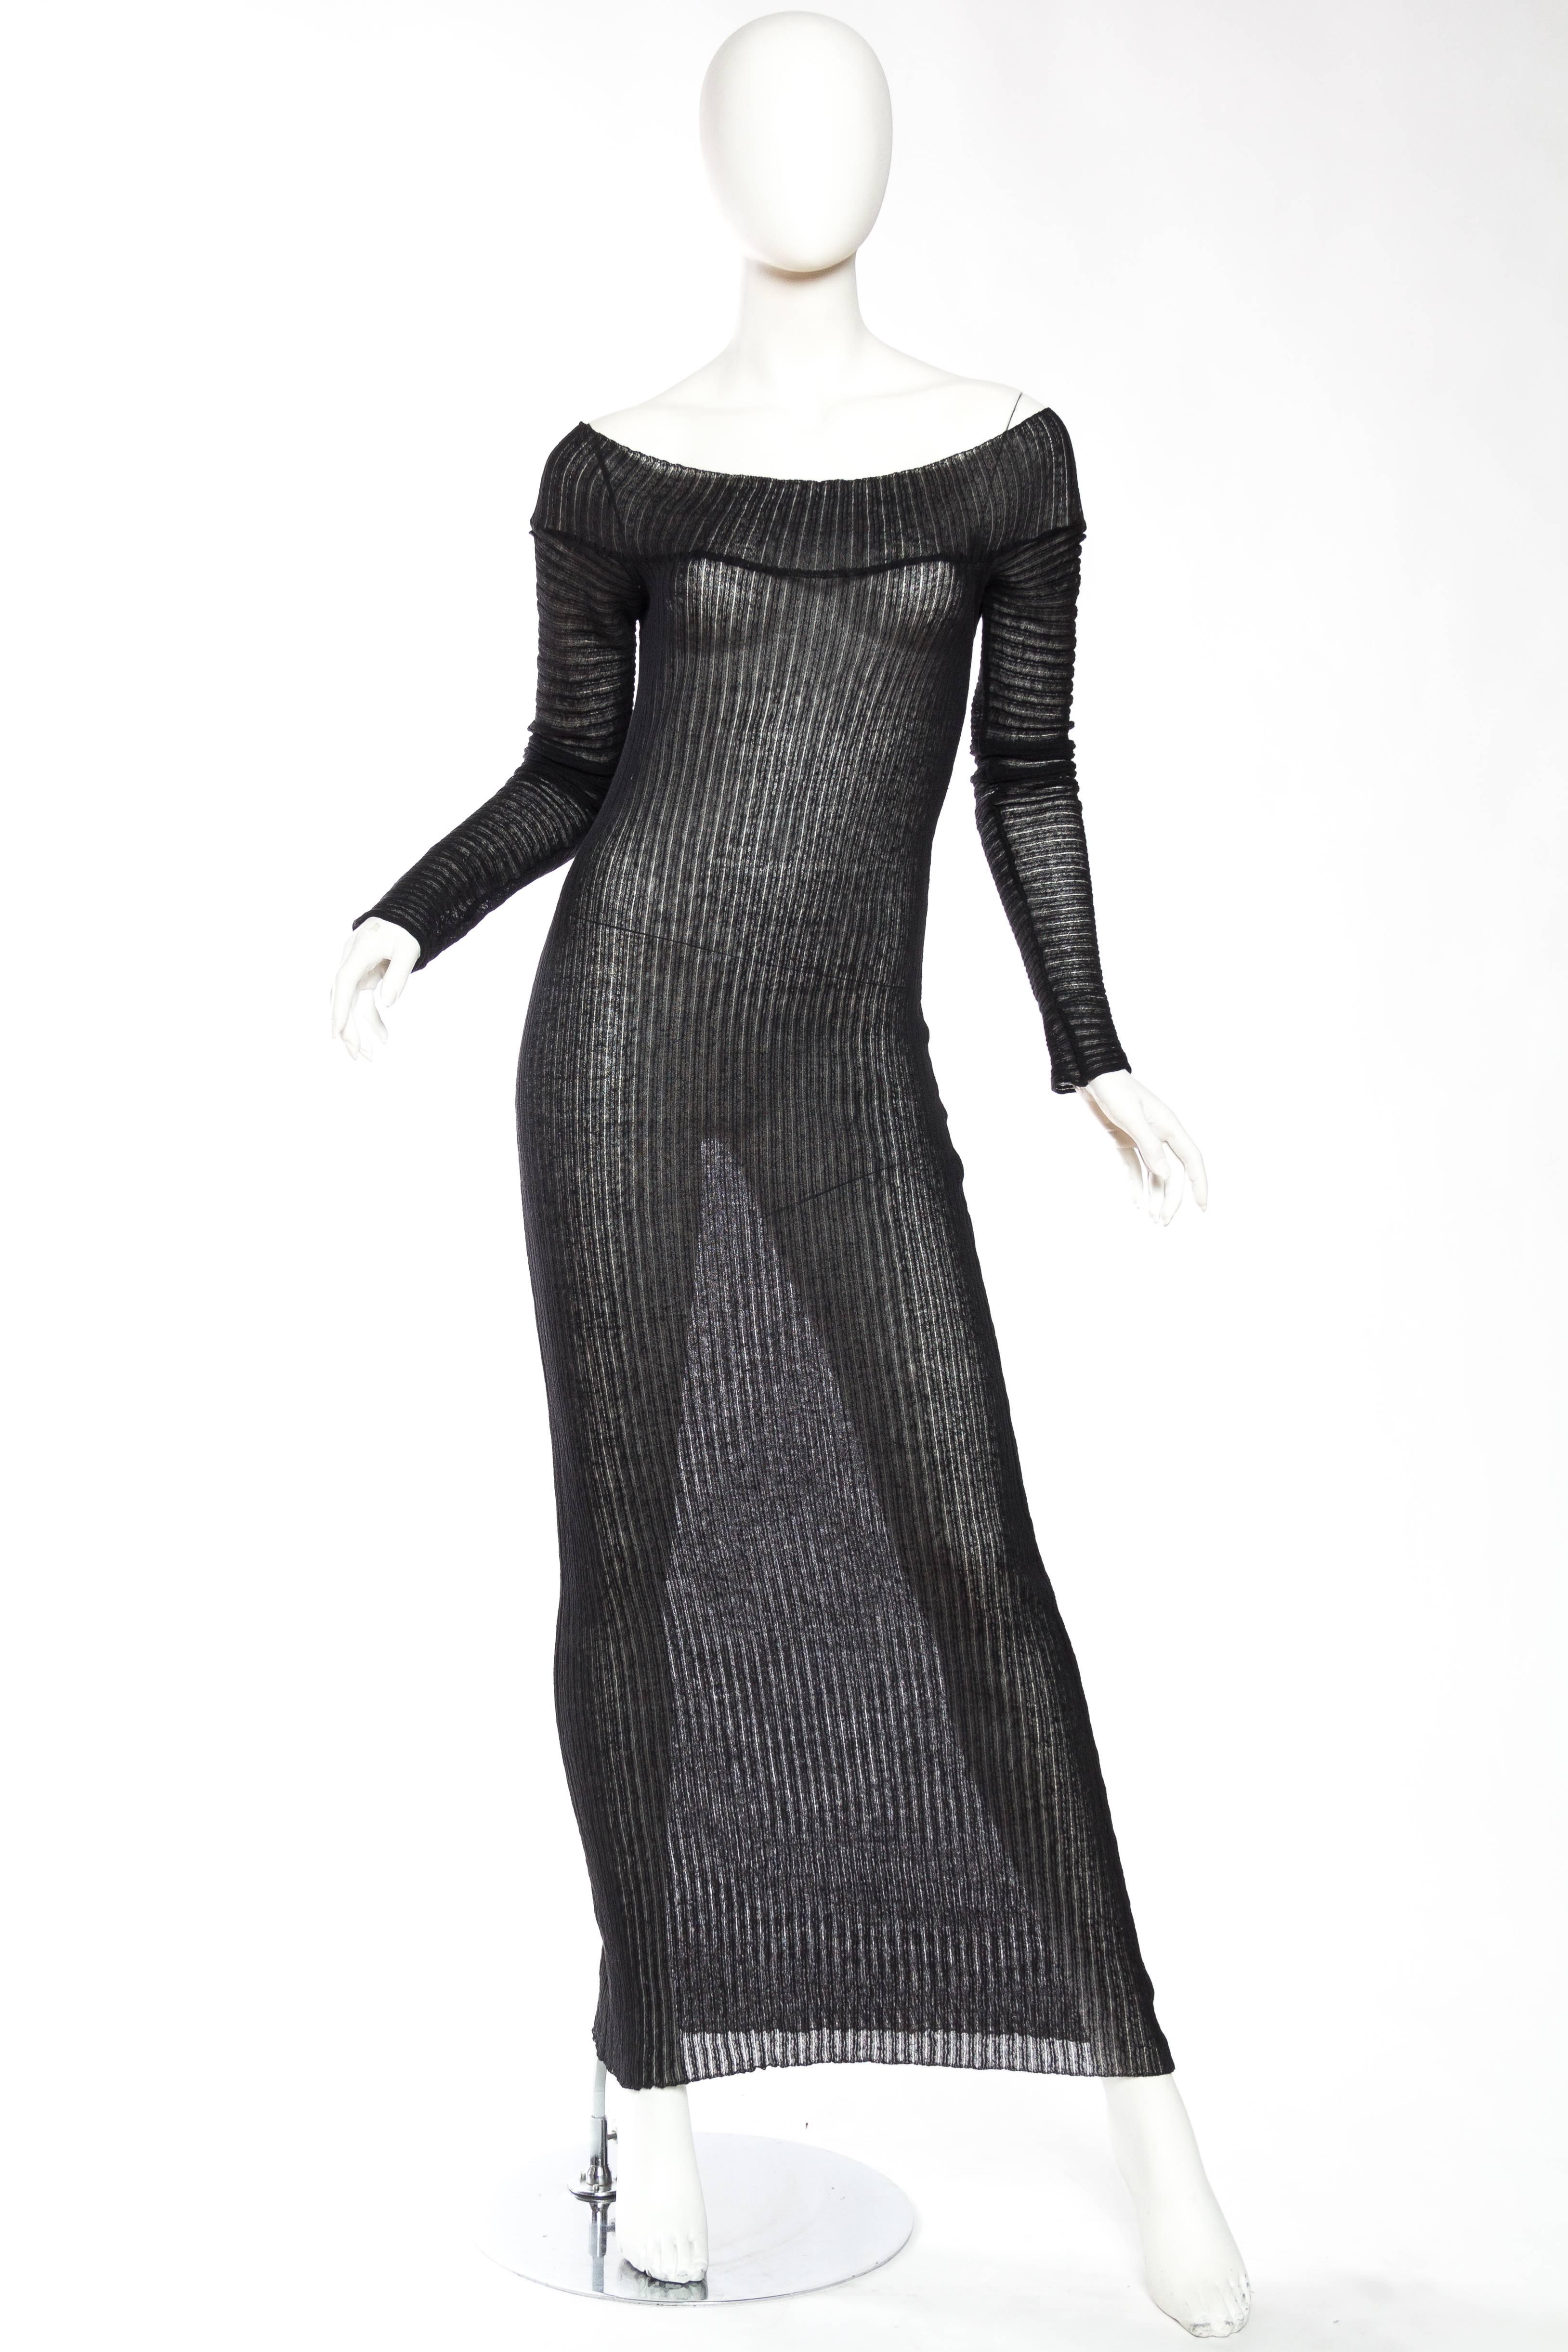 Sheer Off the Shoulder Knit Dress by Jean Paul Gaultier